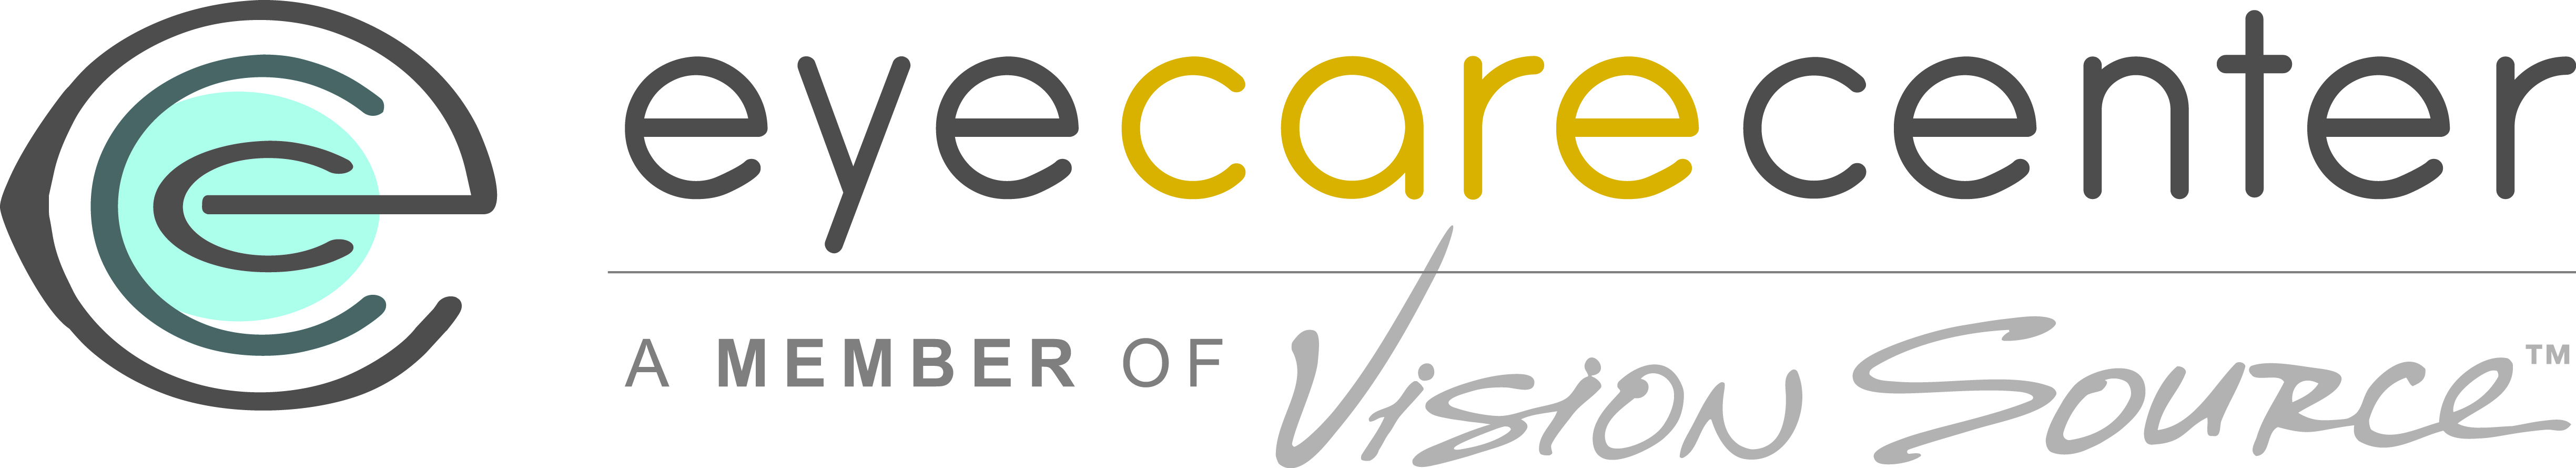 youreyecarecenter logo